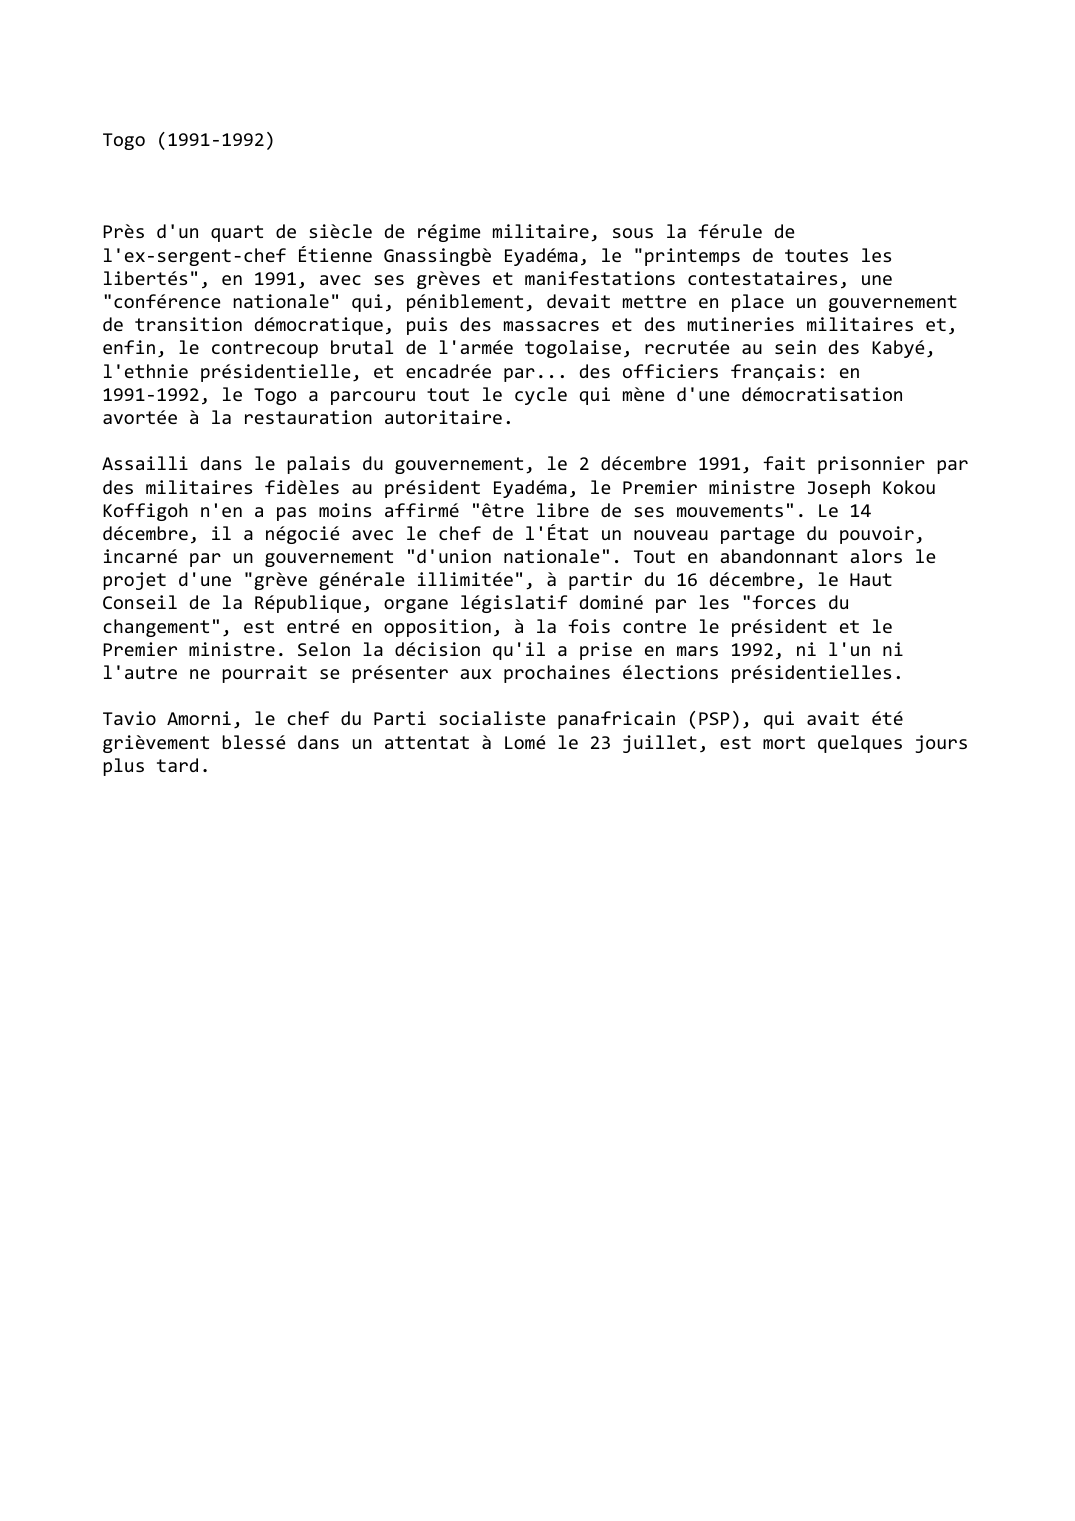 Prévisualisation du document Togo (1991-1992)